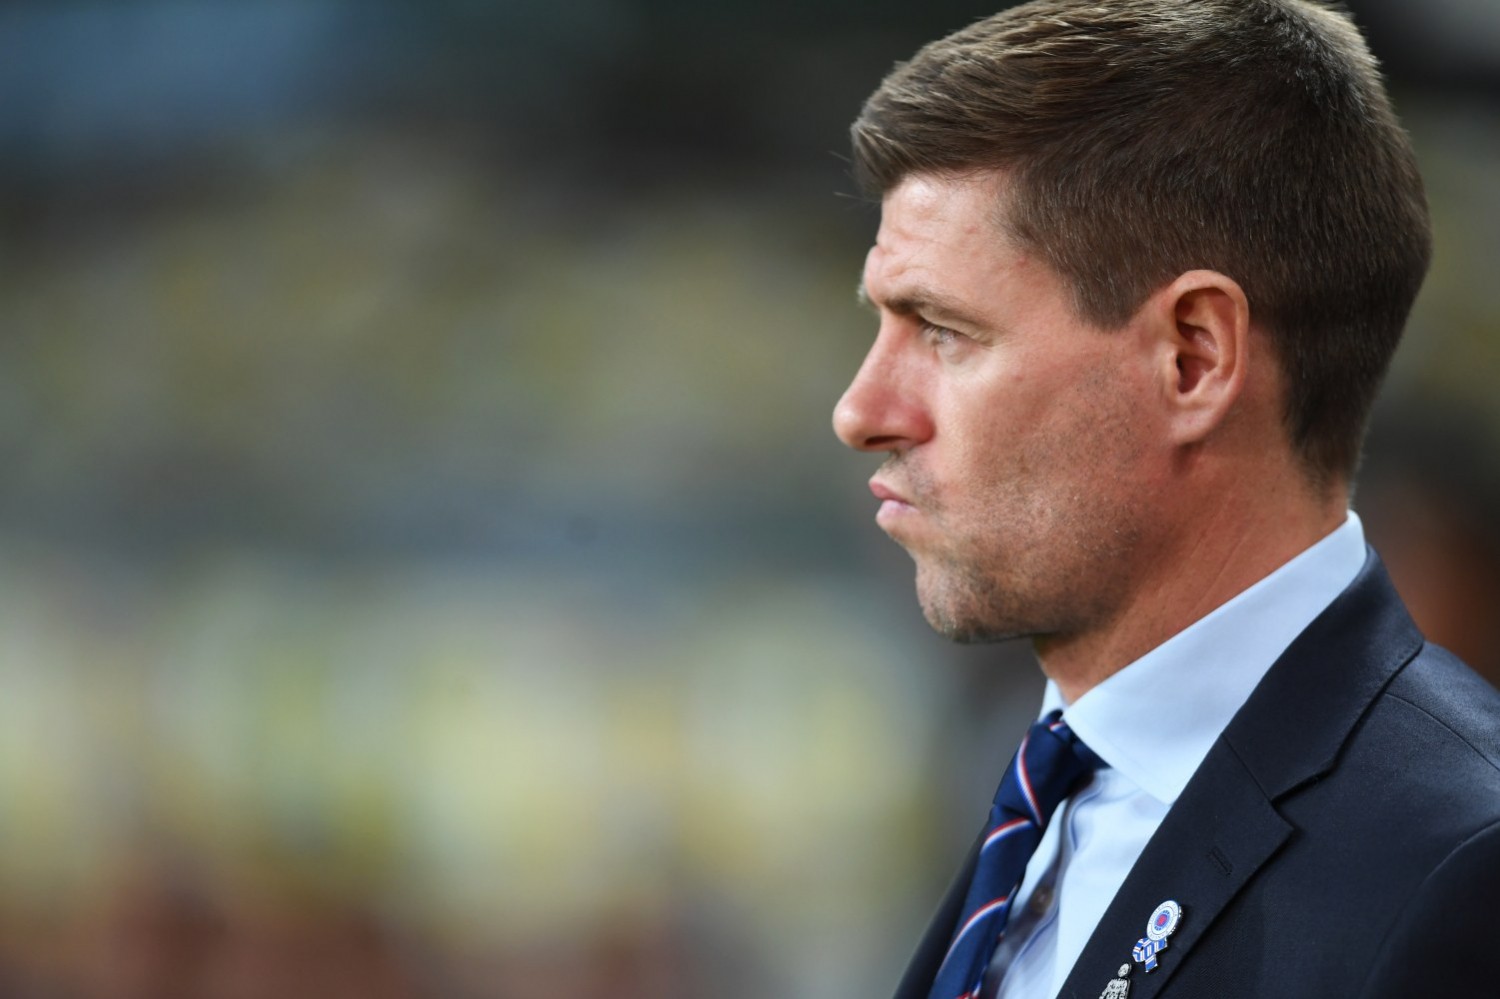 Steven Gerrard opuści najbliższe mecze Aston Villi [OFICJALNIE]